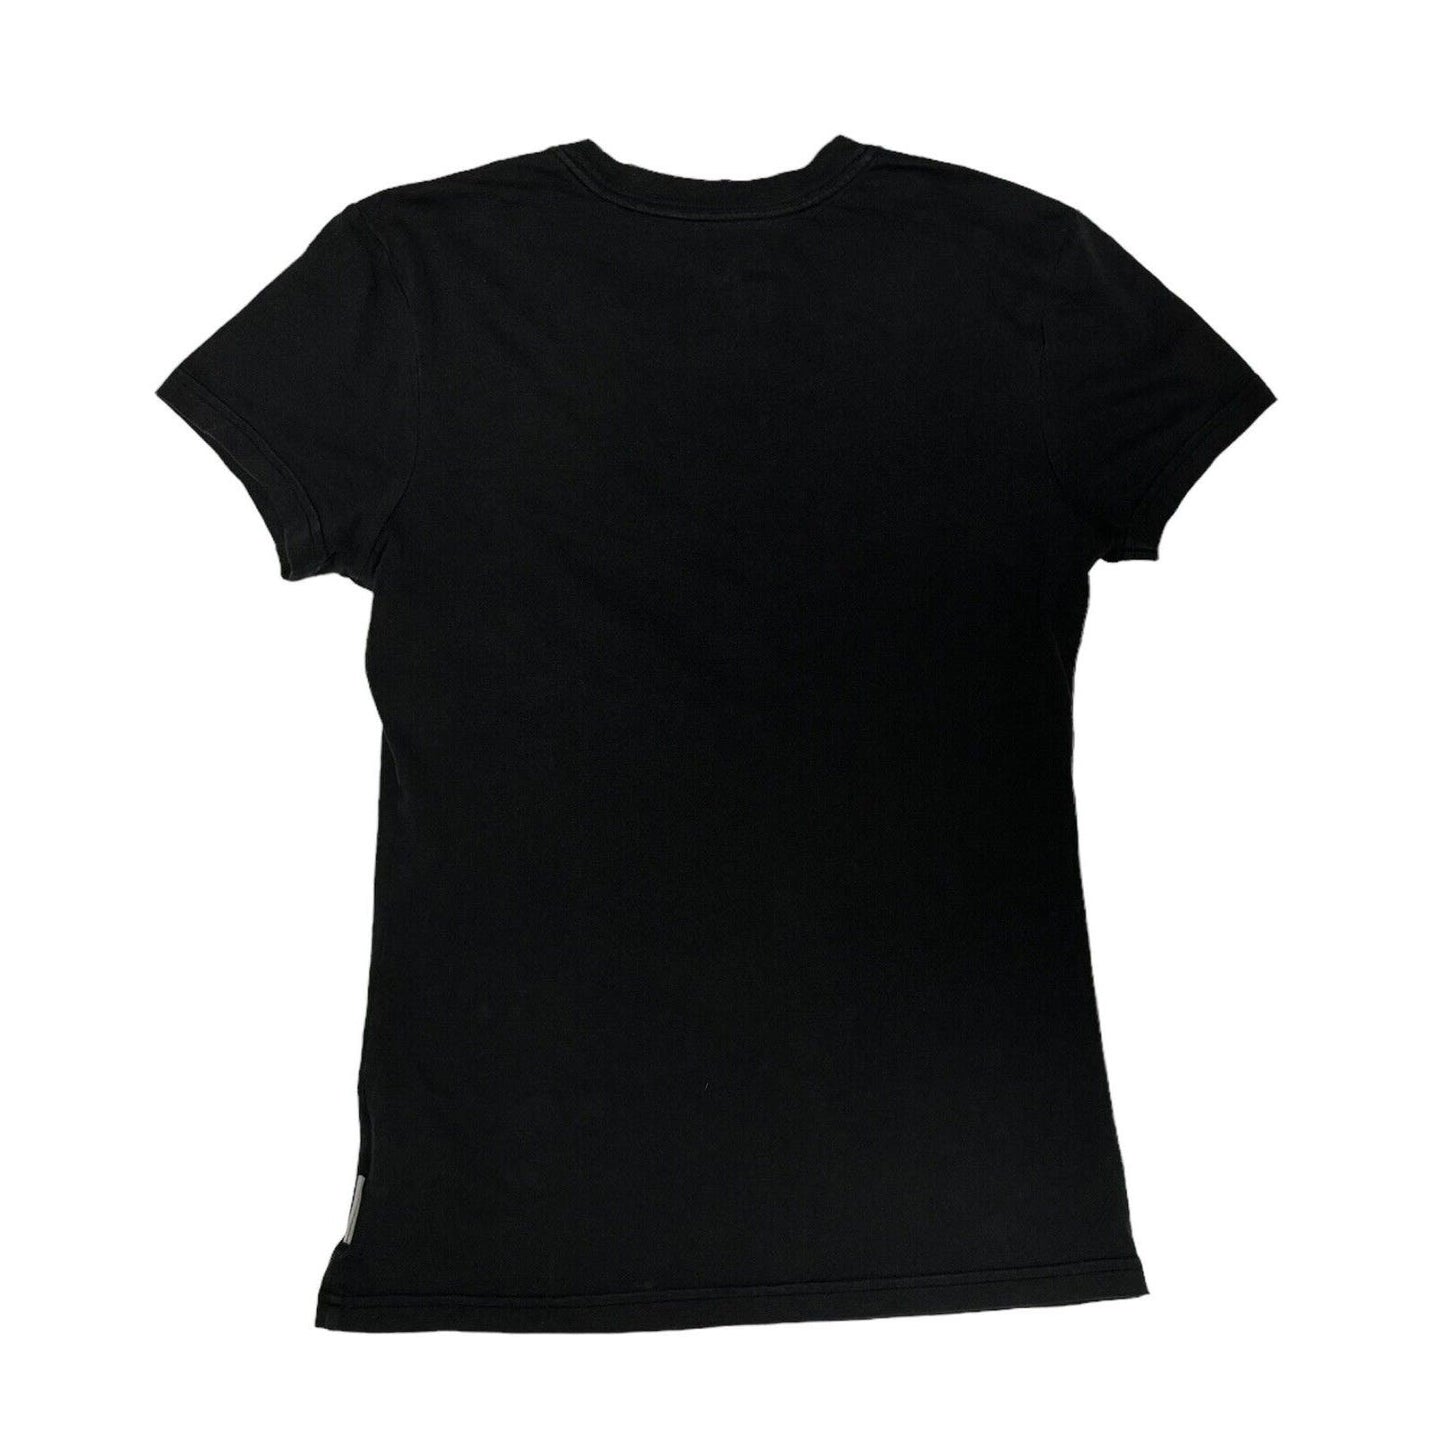 Nike Athlete Swoosh Logo Dri Fit Cotton Tee Shirt Small Black